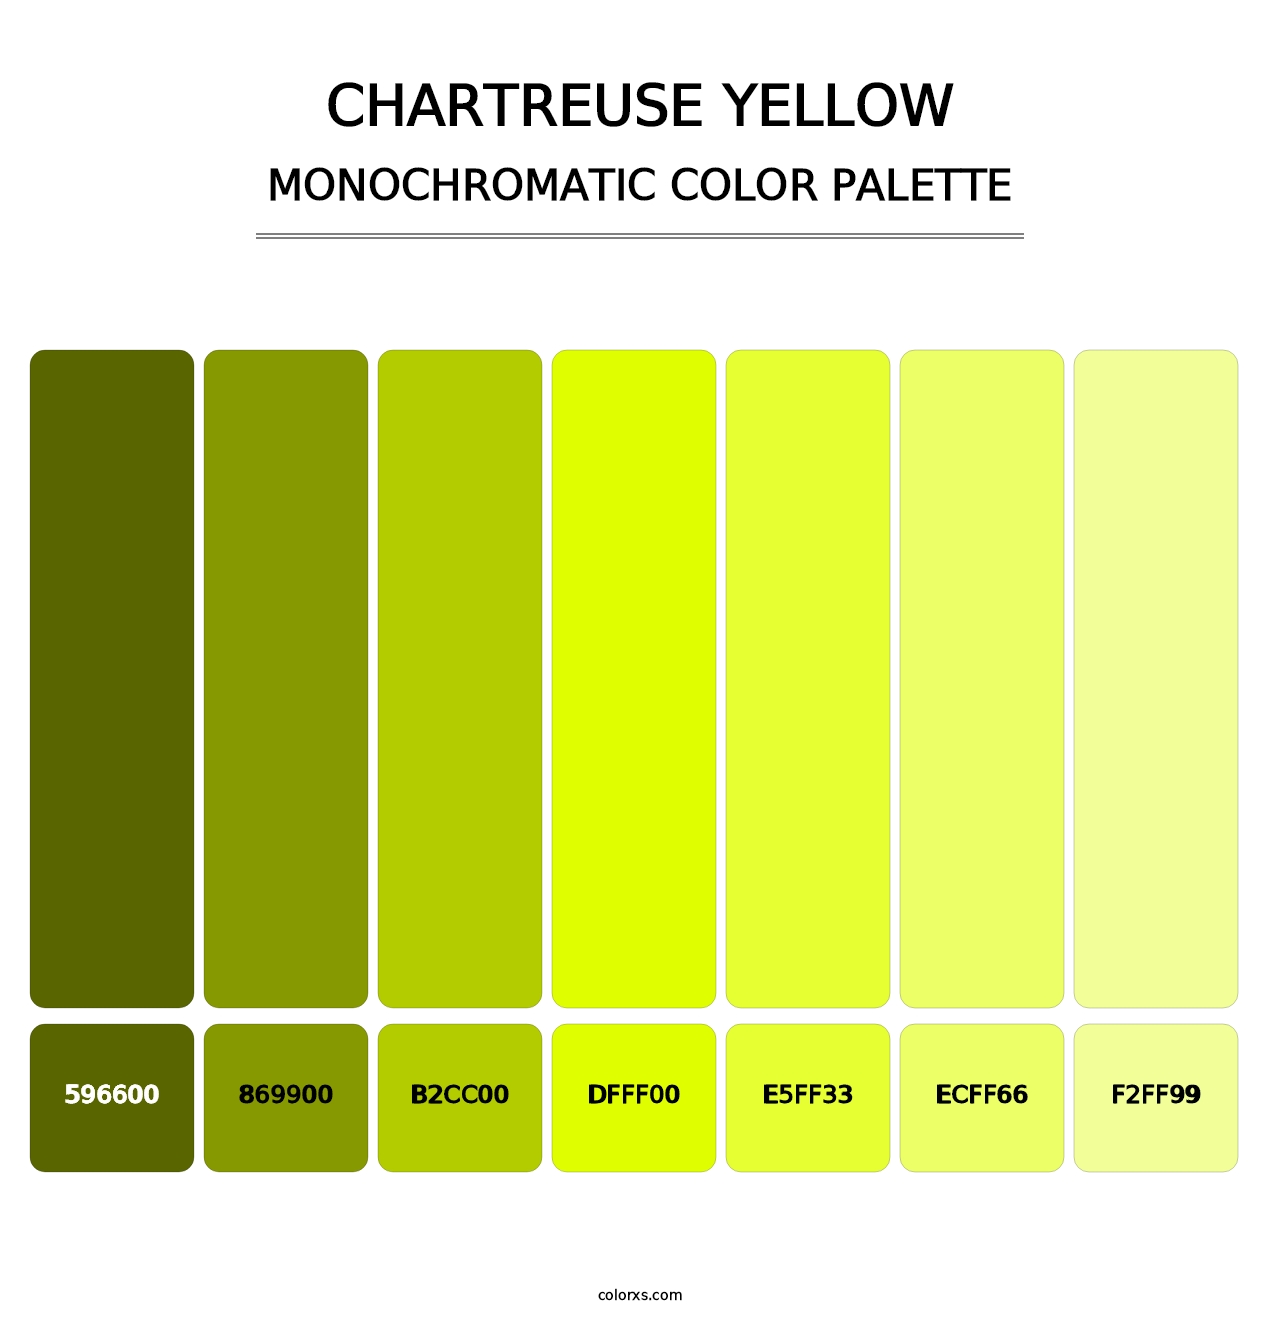 Chartreuse Yellow - Monochromatic Color Palette